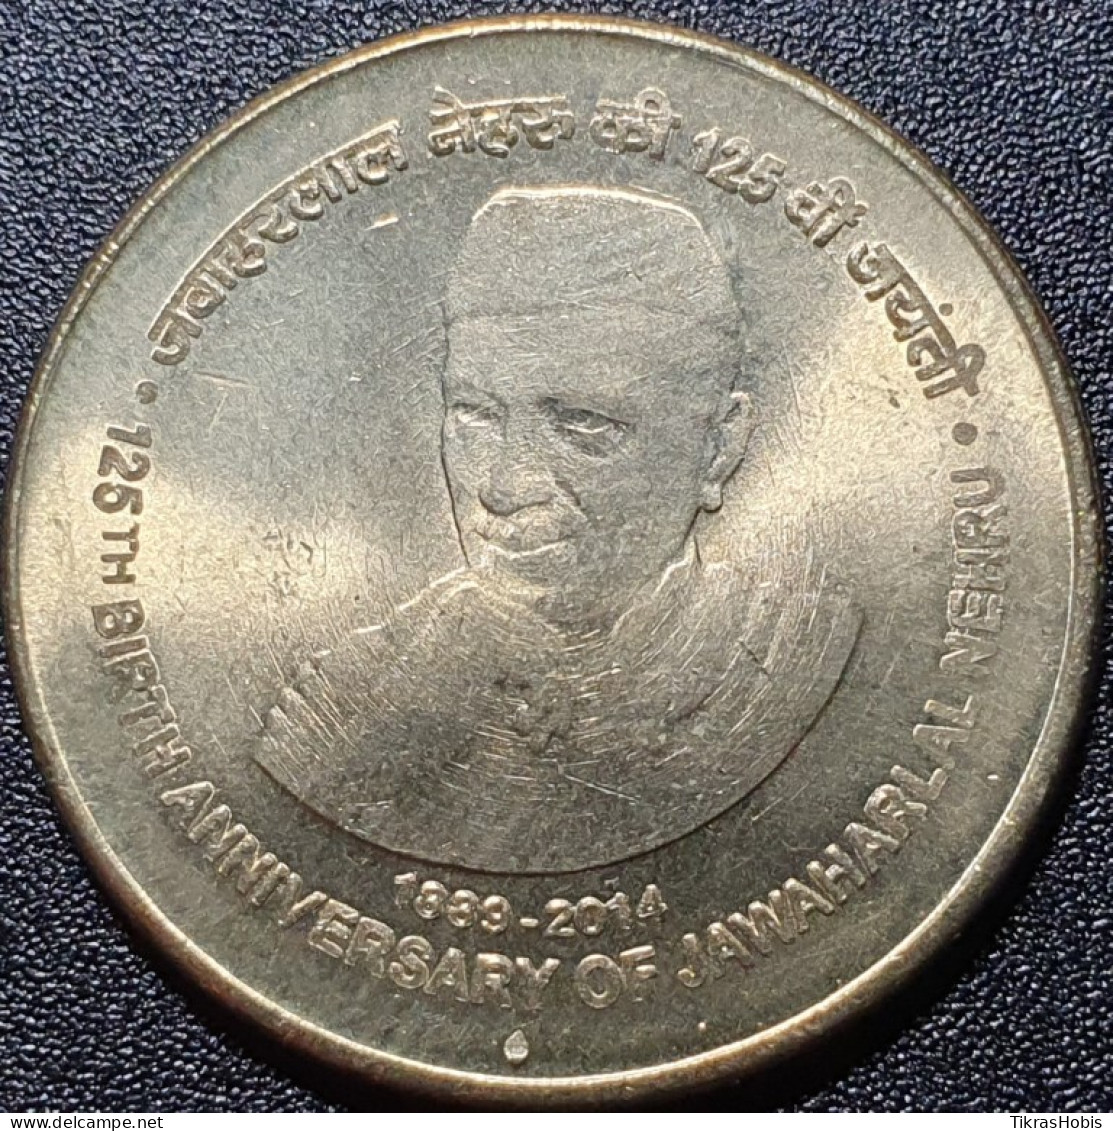 India 5 Rupees, 2014 Jawaharlal Nehru 125 UC103 - India